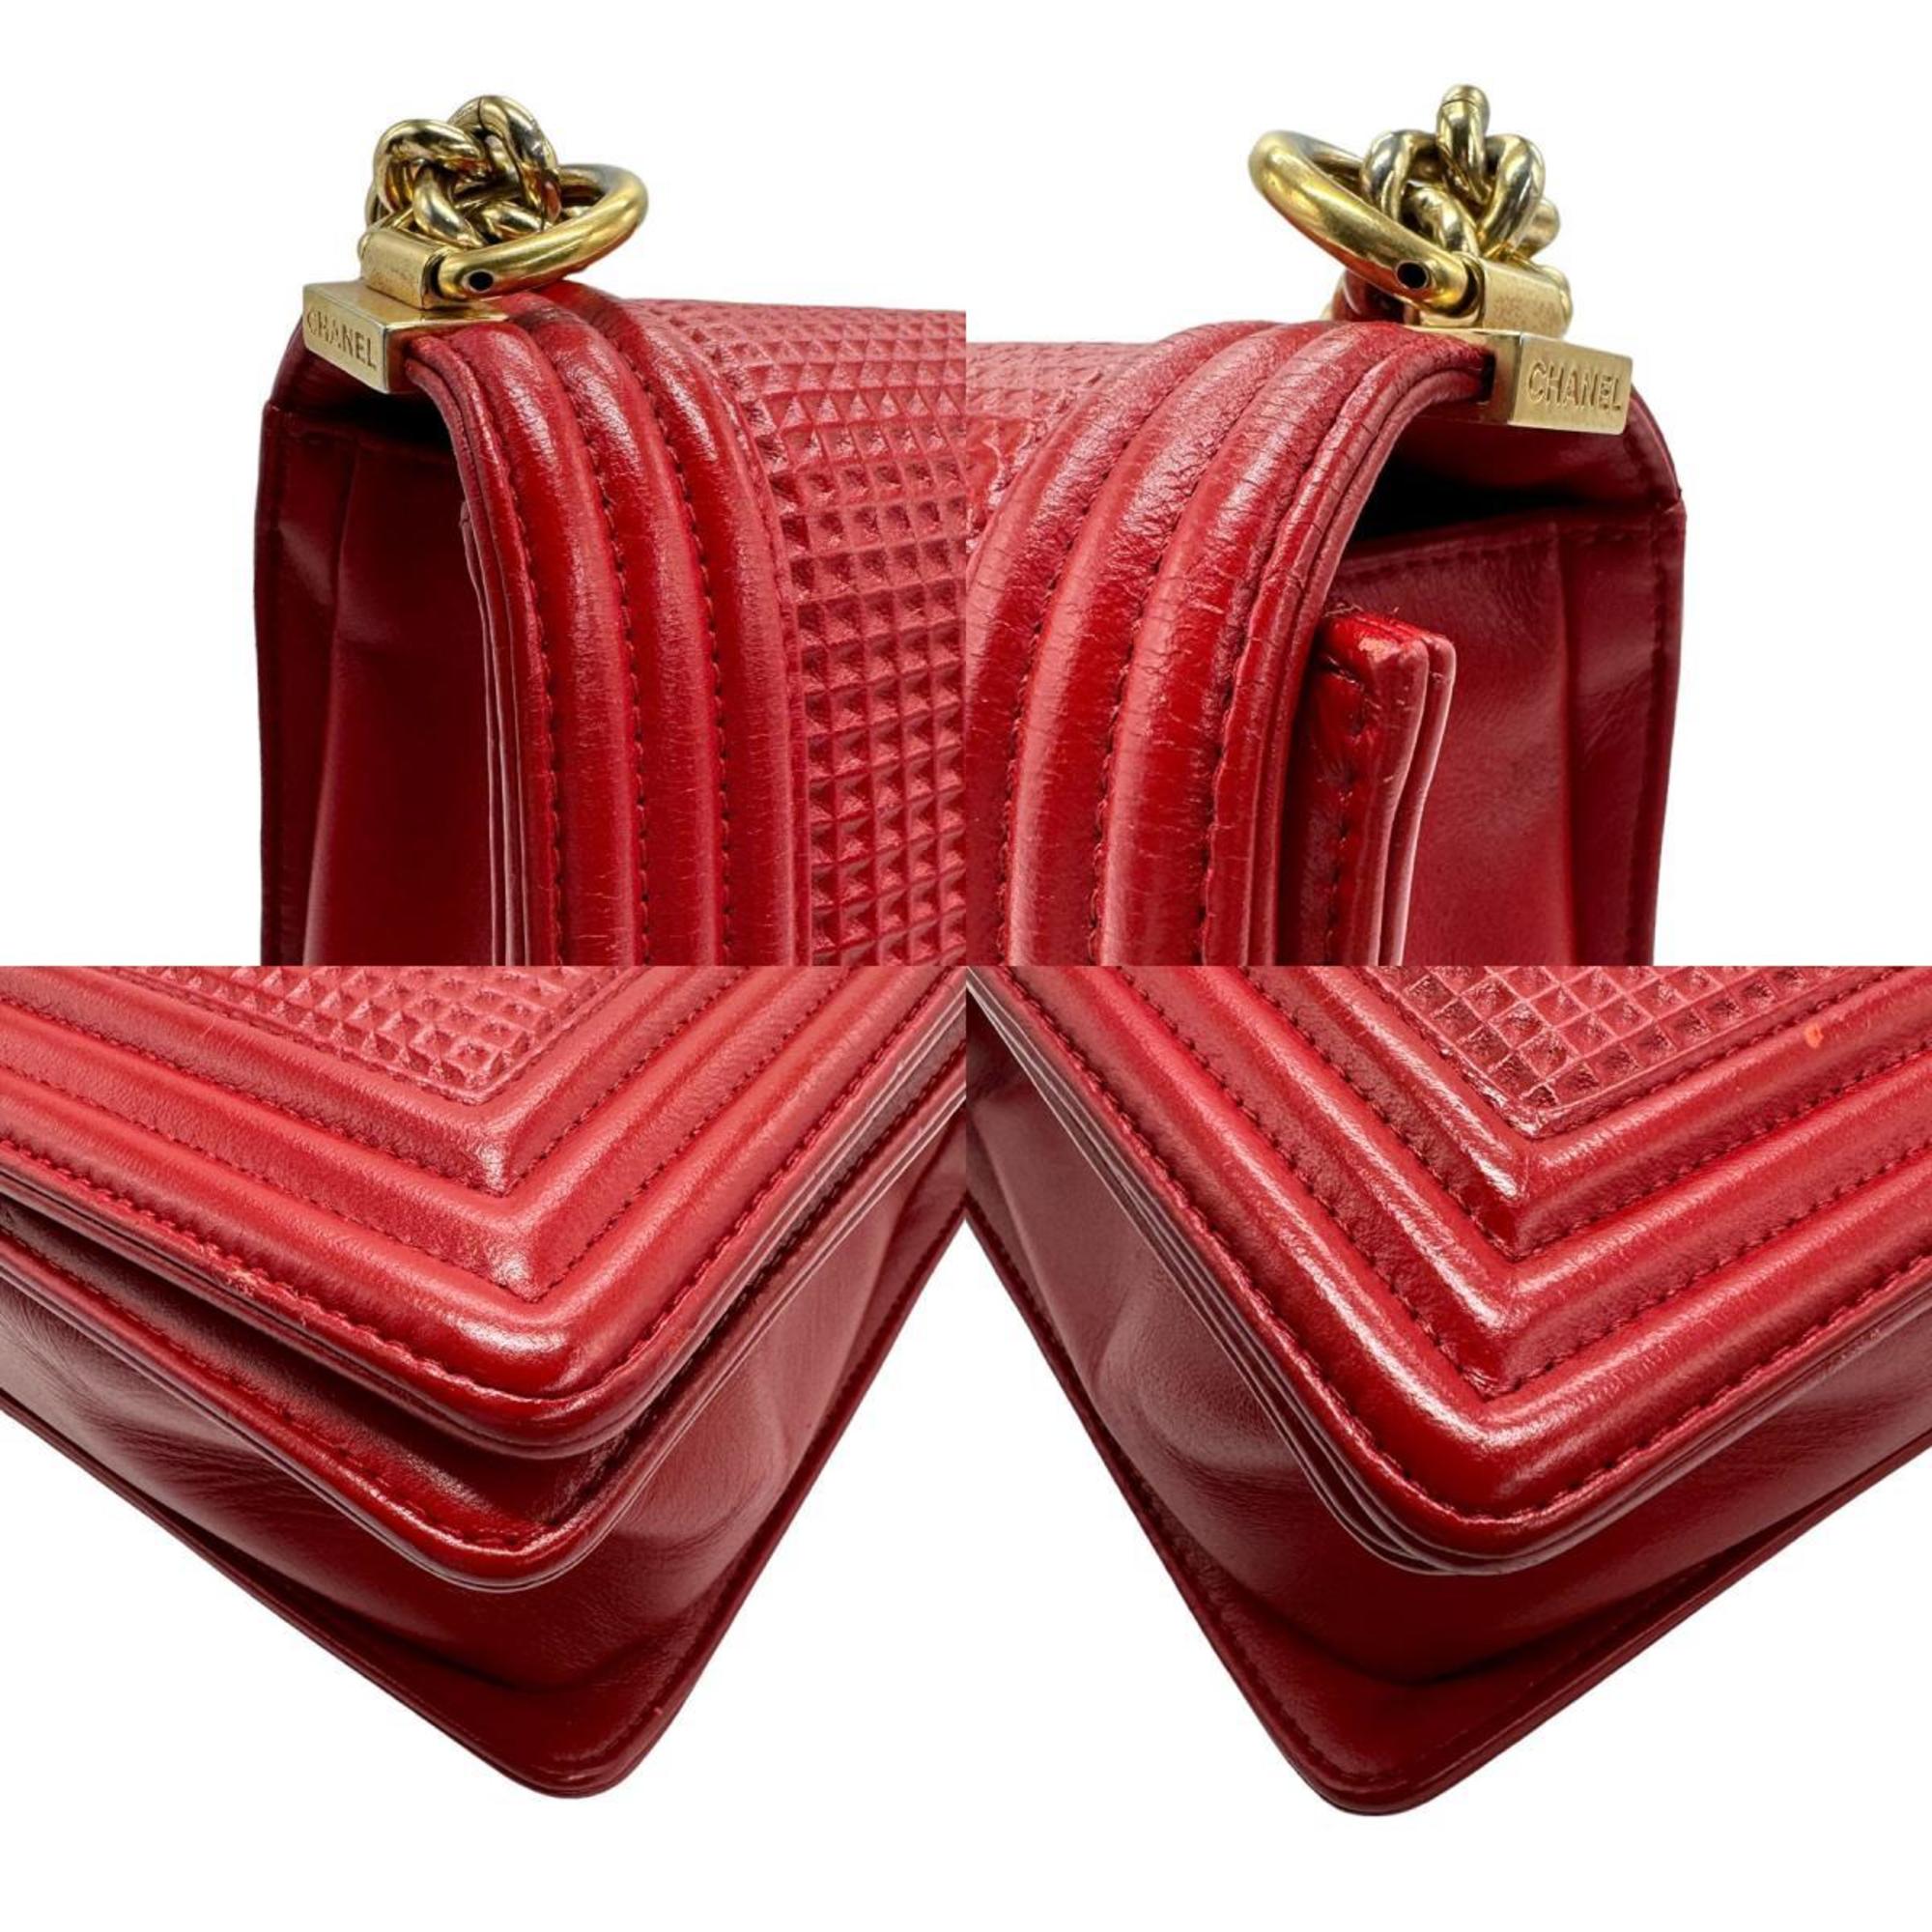 CHANEL Shoulder Bag Boy Chanel Leather Red Women's z1330